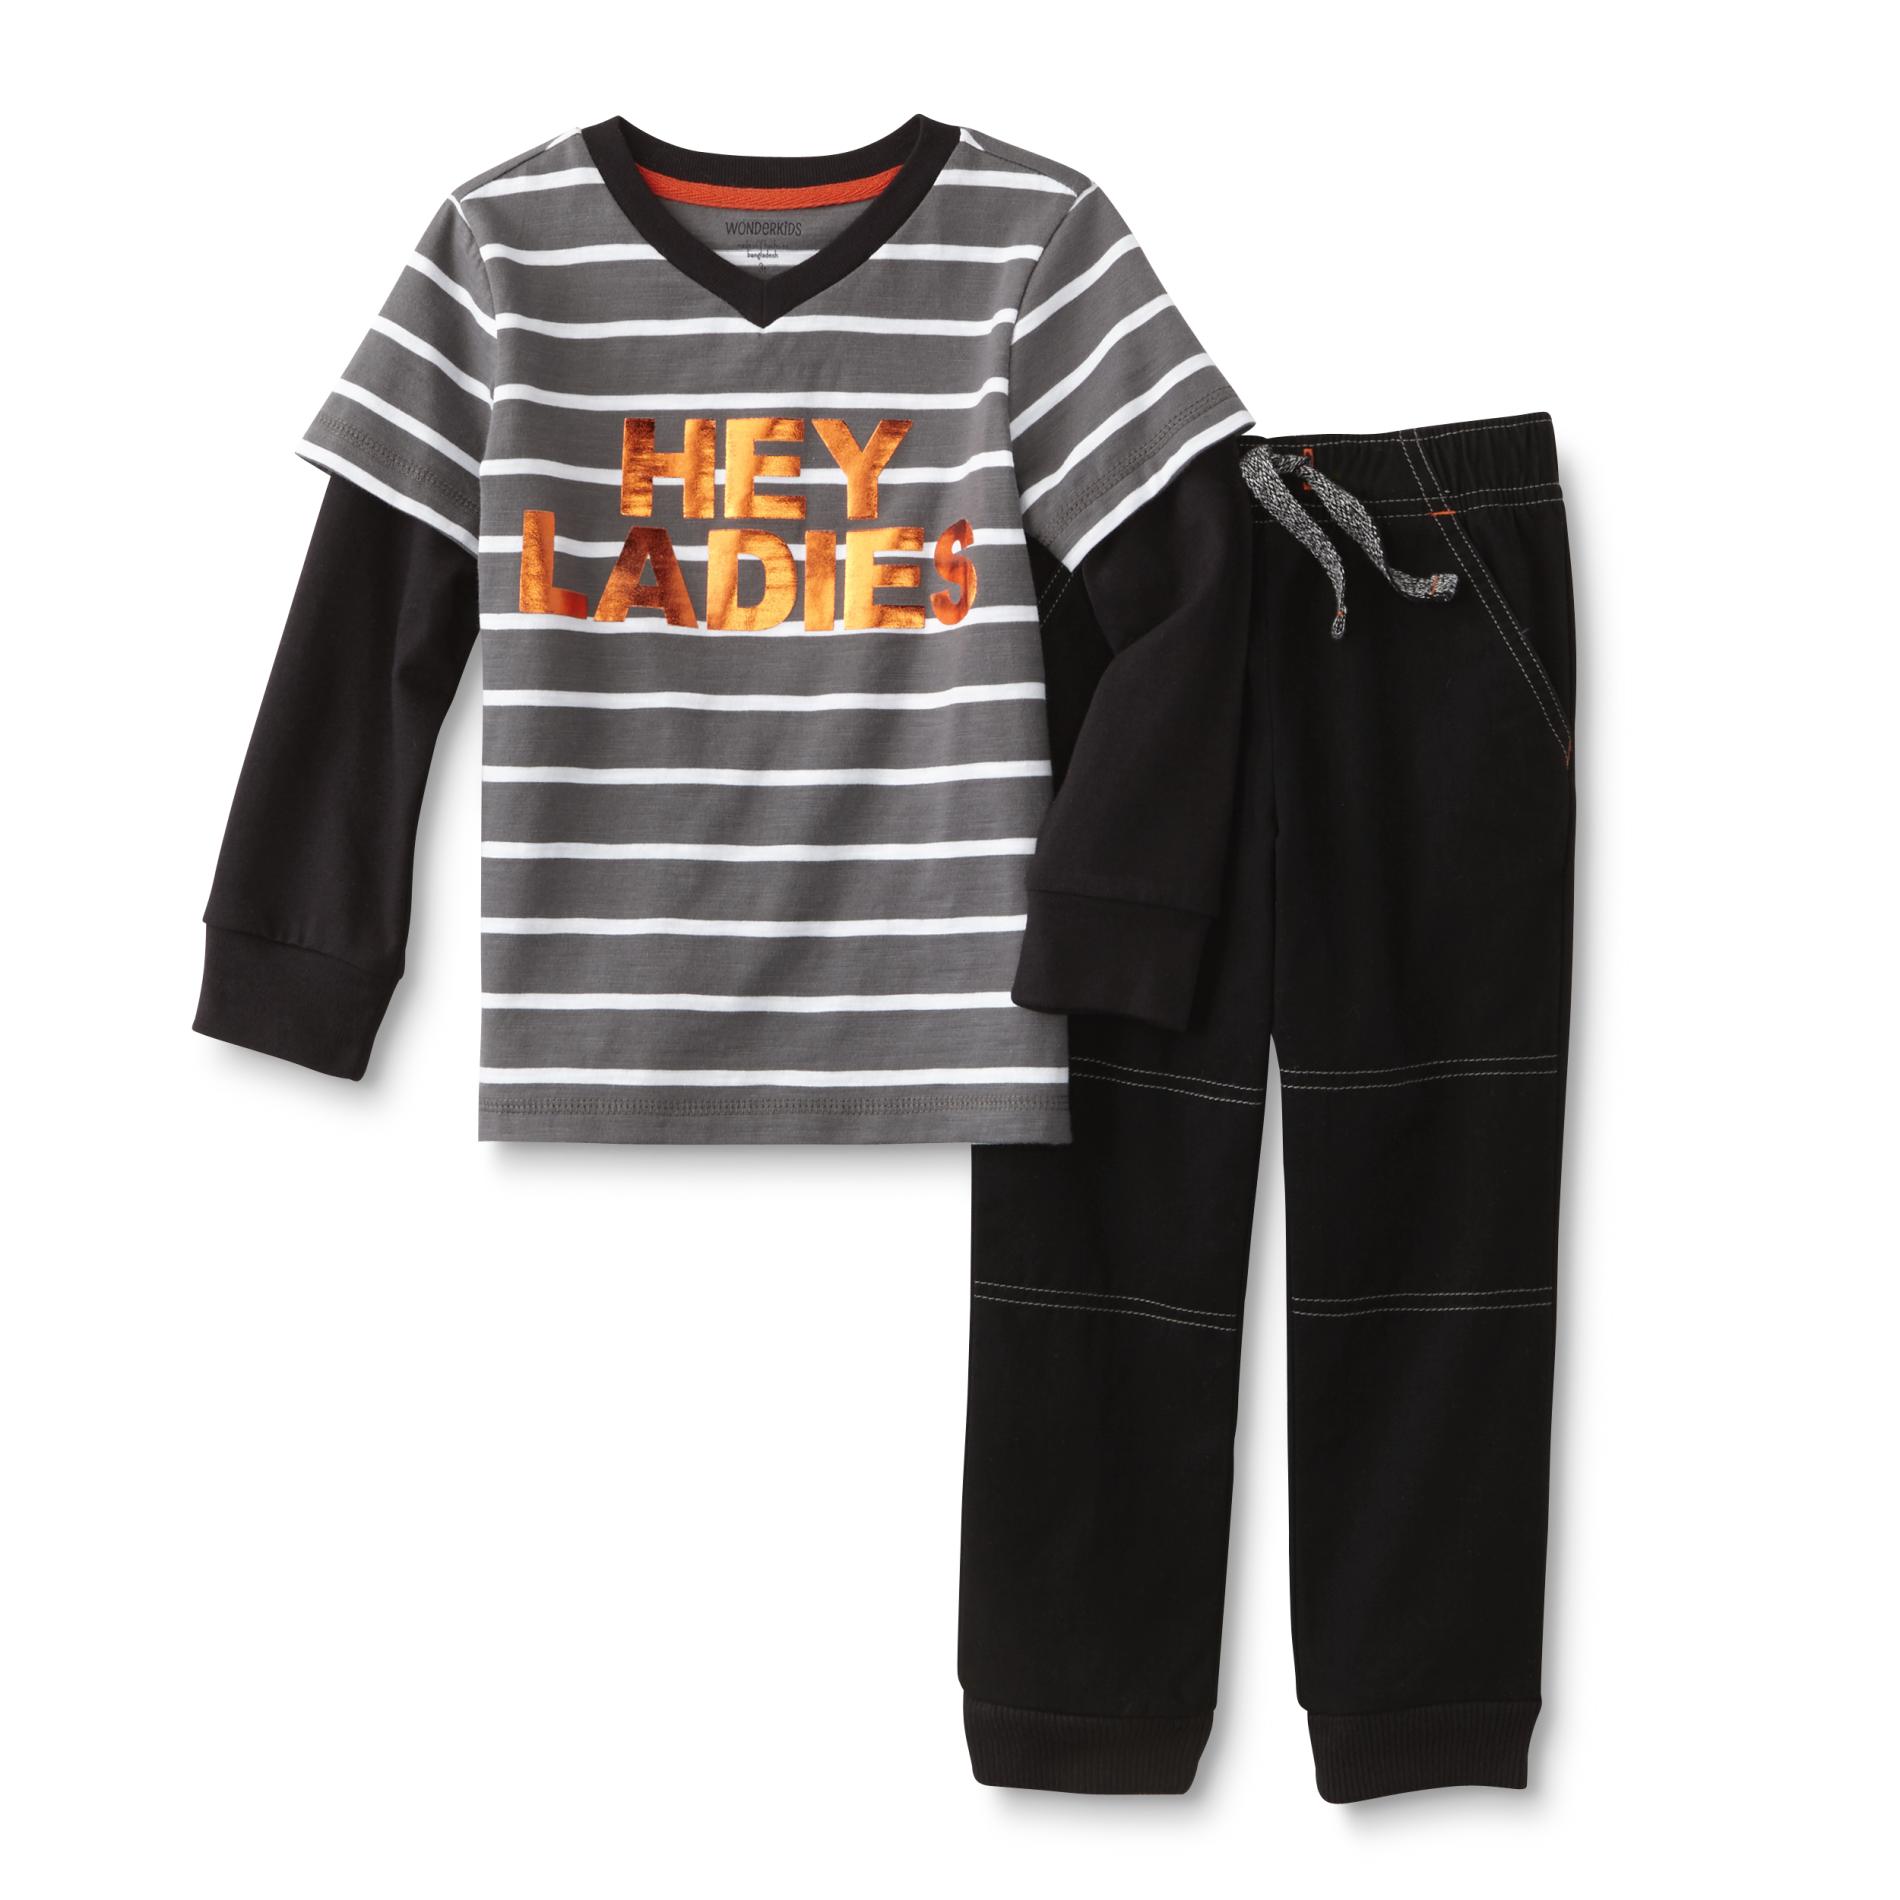 WonderKids Infant & Toddler Boy's Graphic T-Shirt & Jogger Pants - Hey Ladies